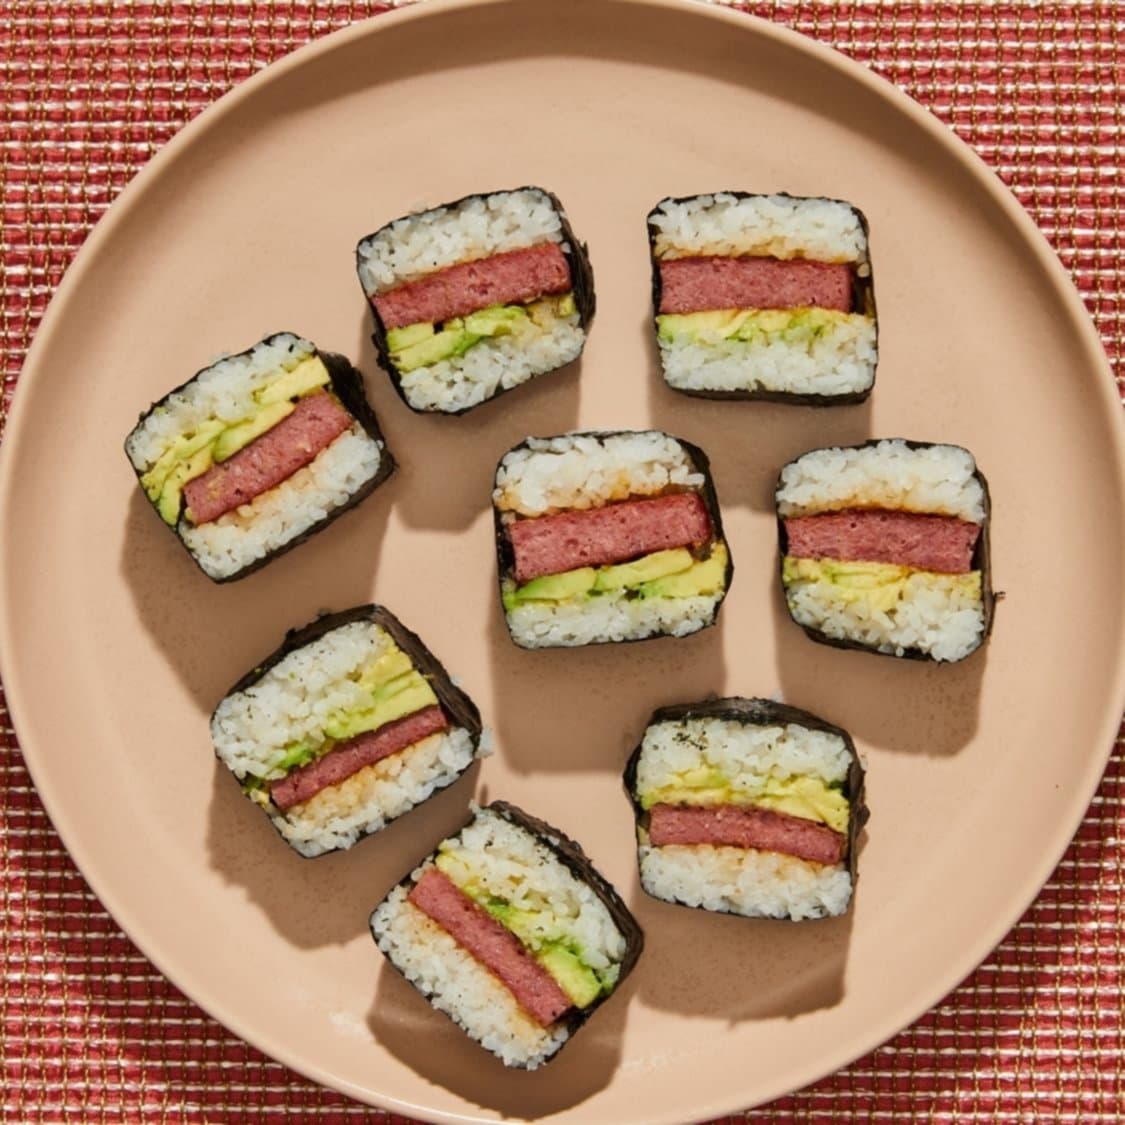 https://fleishigs.com/images/mobile-app/recipes/1804-list-sushi-rice.jpg